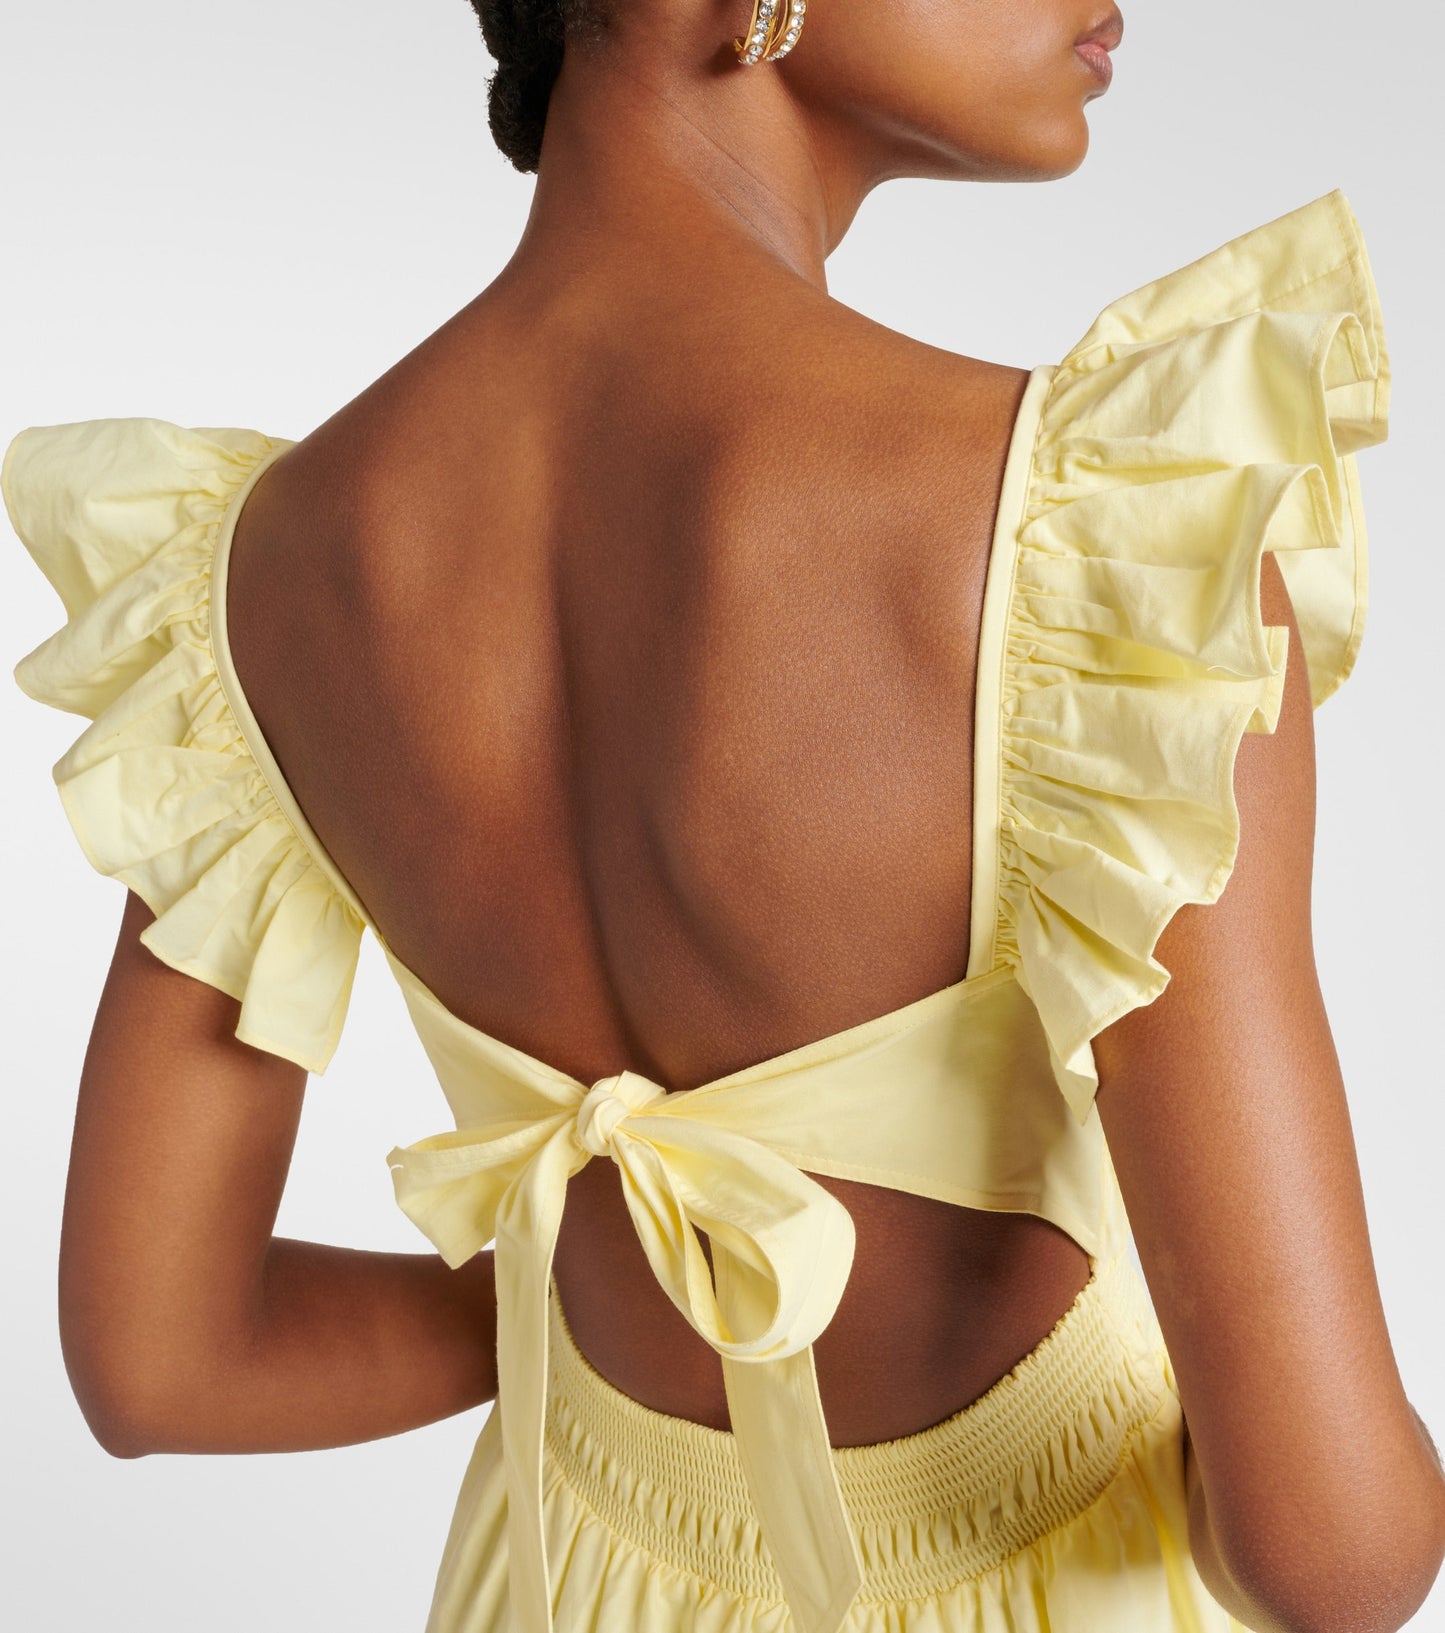 SP Yellow Cotton Midi Dress